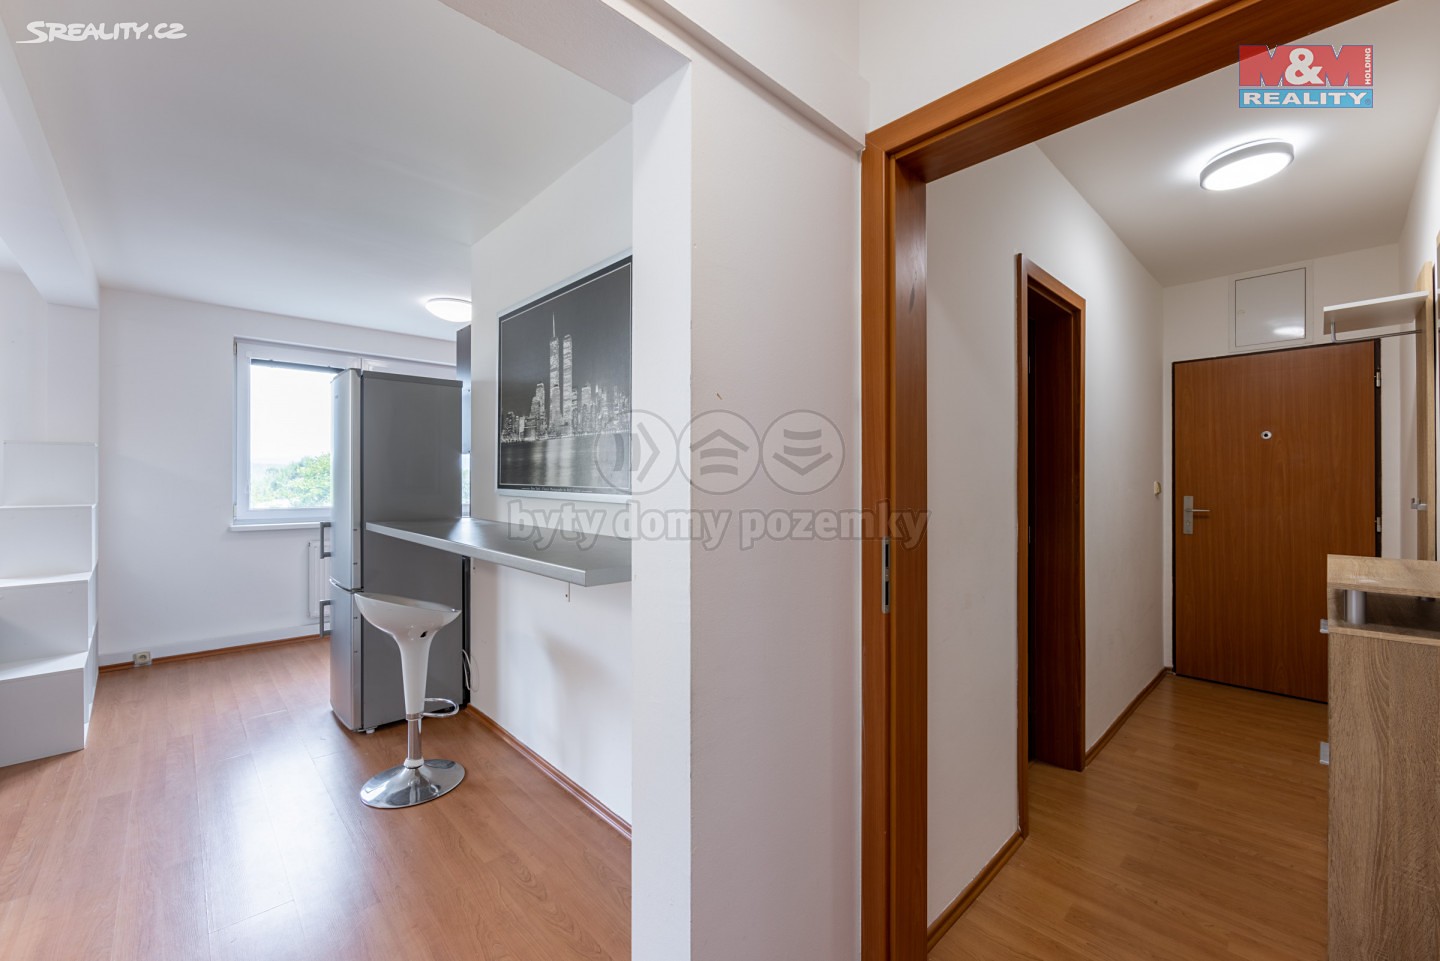 Prodej bytu 1+1 36 m², Dubová, Karlovy Vary - Bohatice